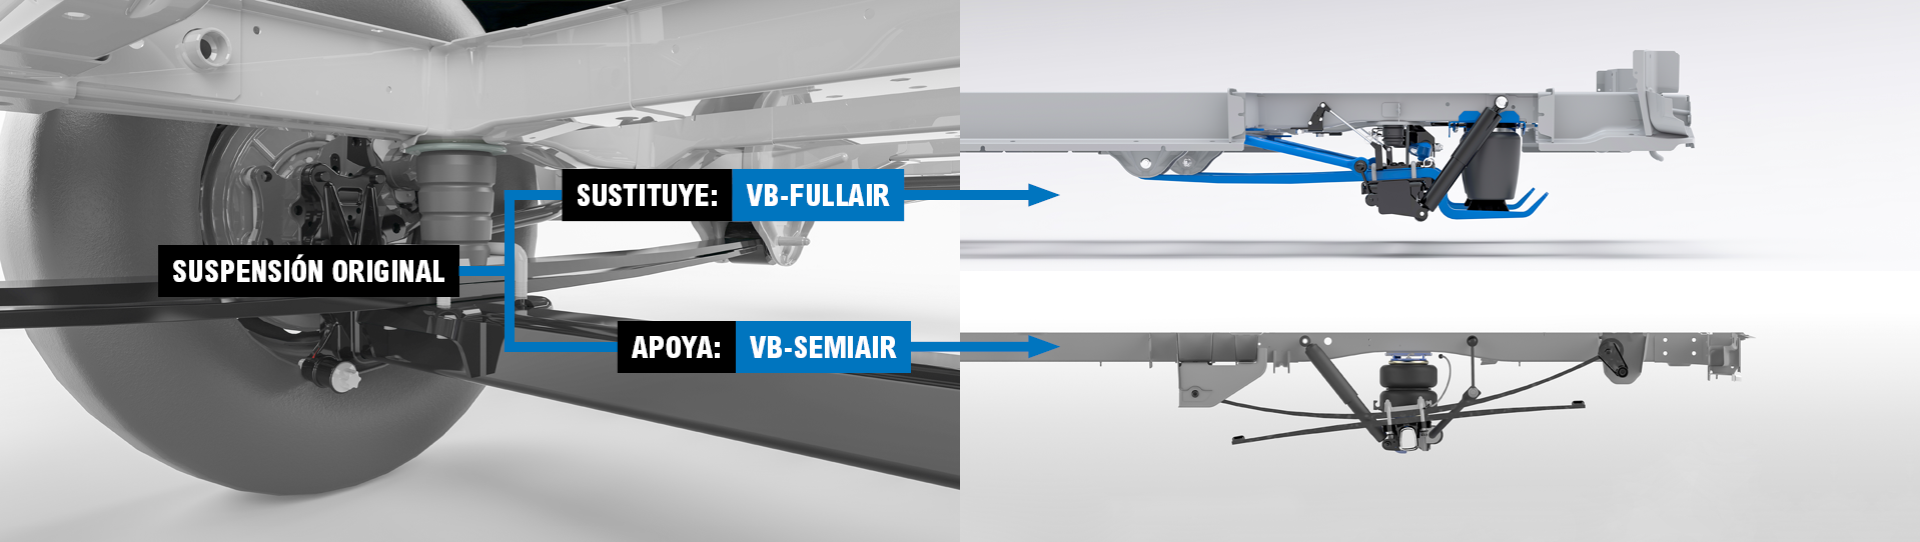 Image: VB-FullAir vs VB-SemiAir